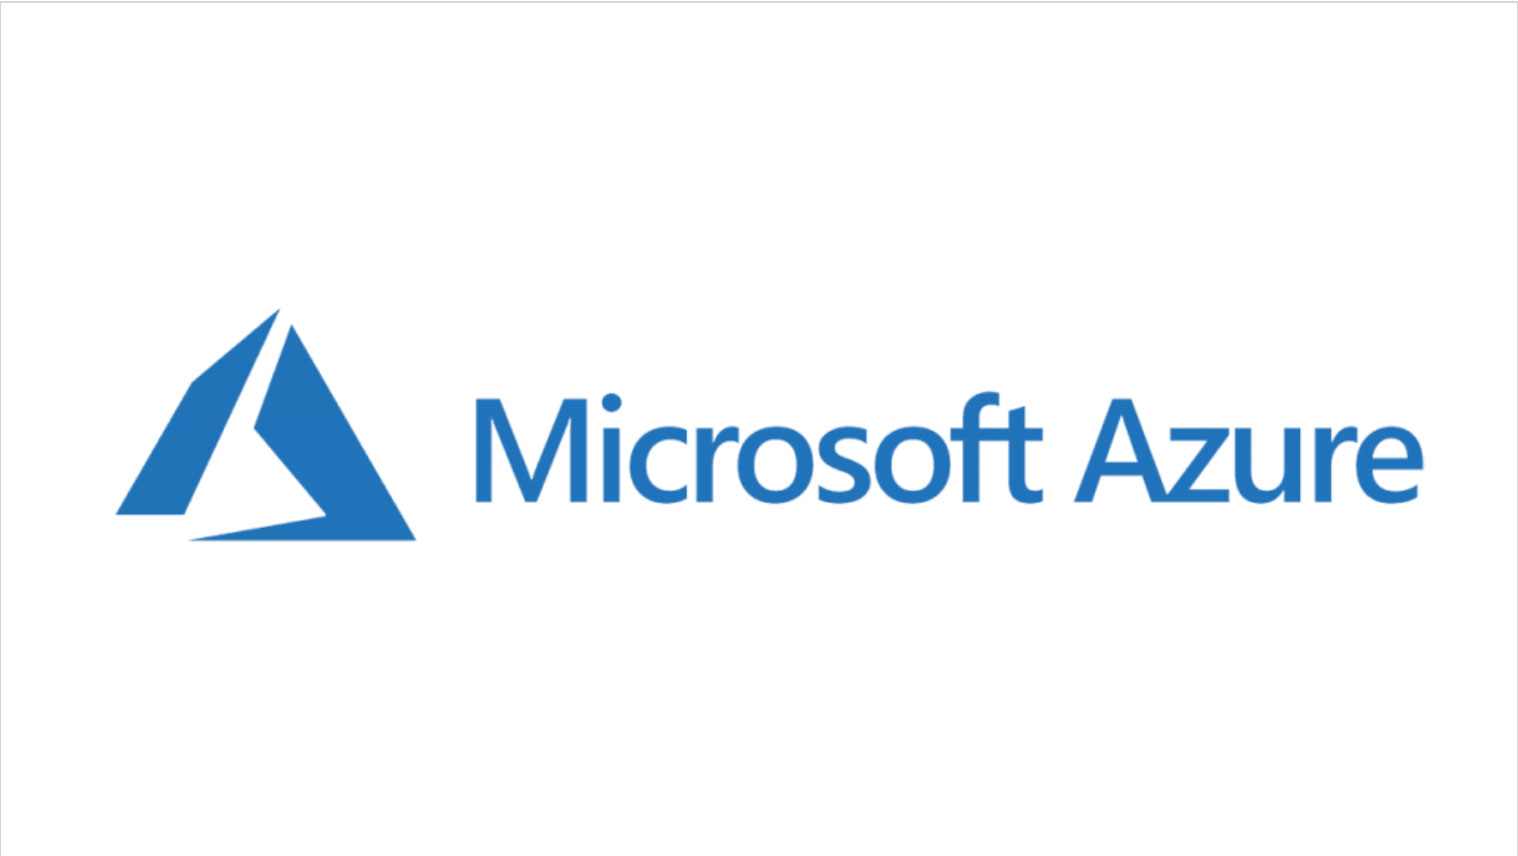 Microsoft Azure: 13 key benefits for a UK business